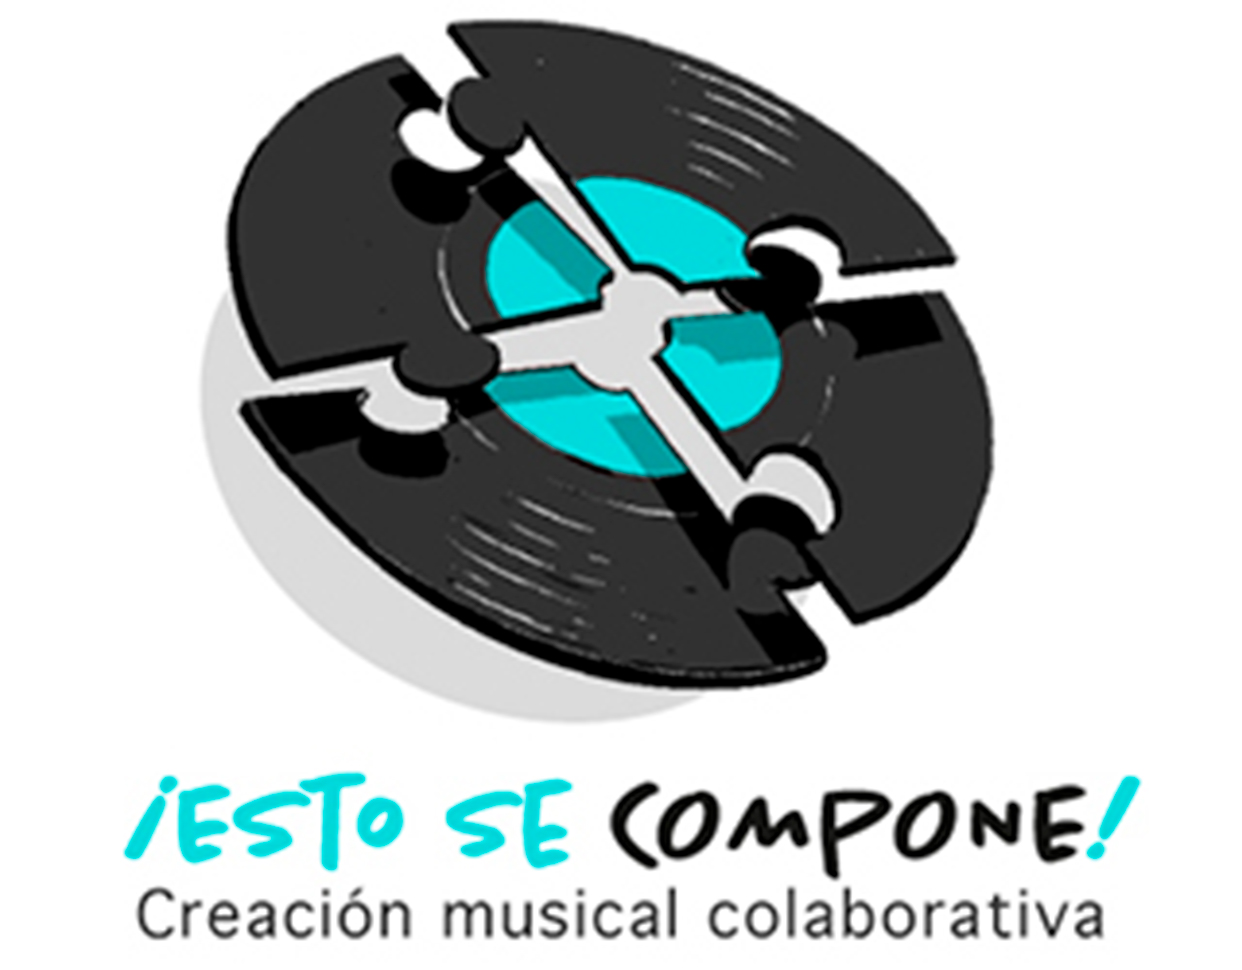 Convocatoria: ¡Esto se compone!: creación musical colaborativa